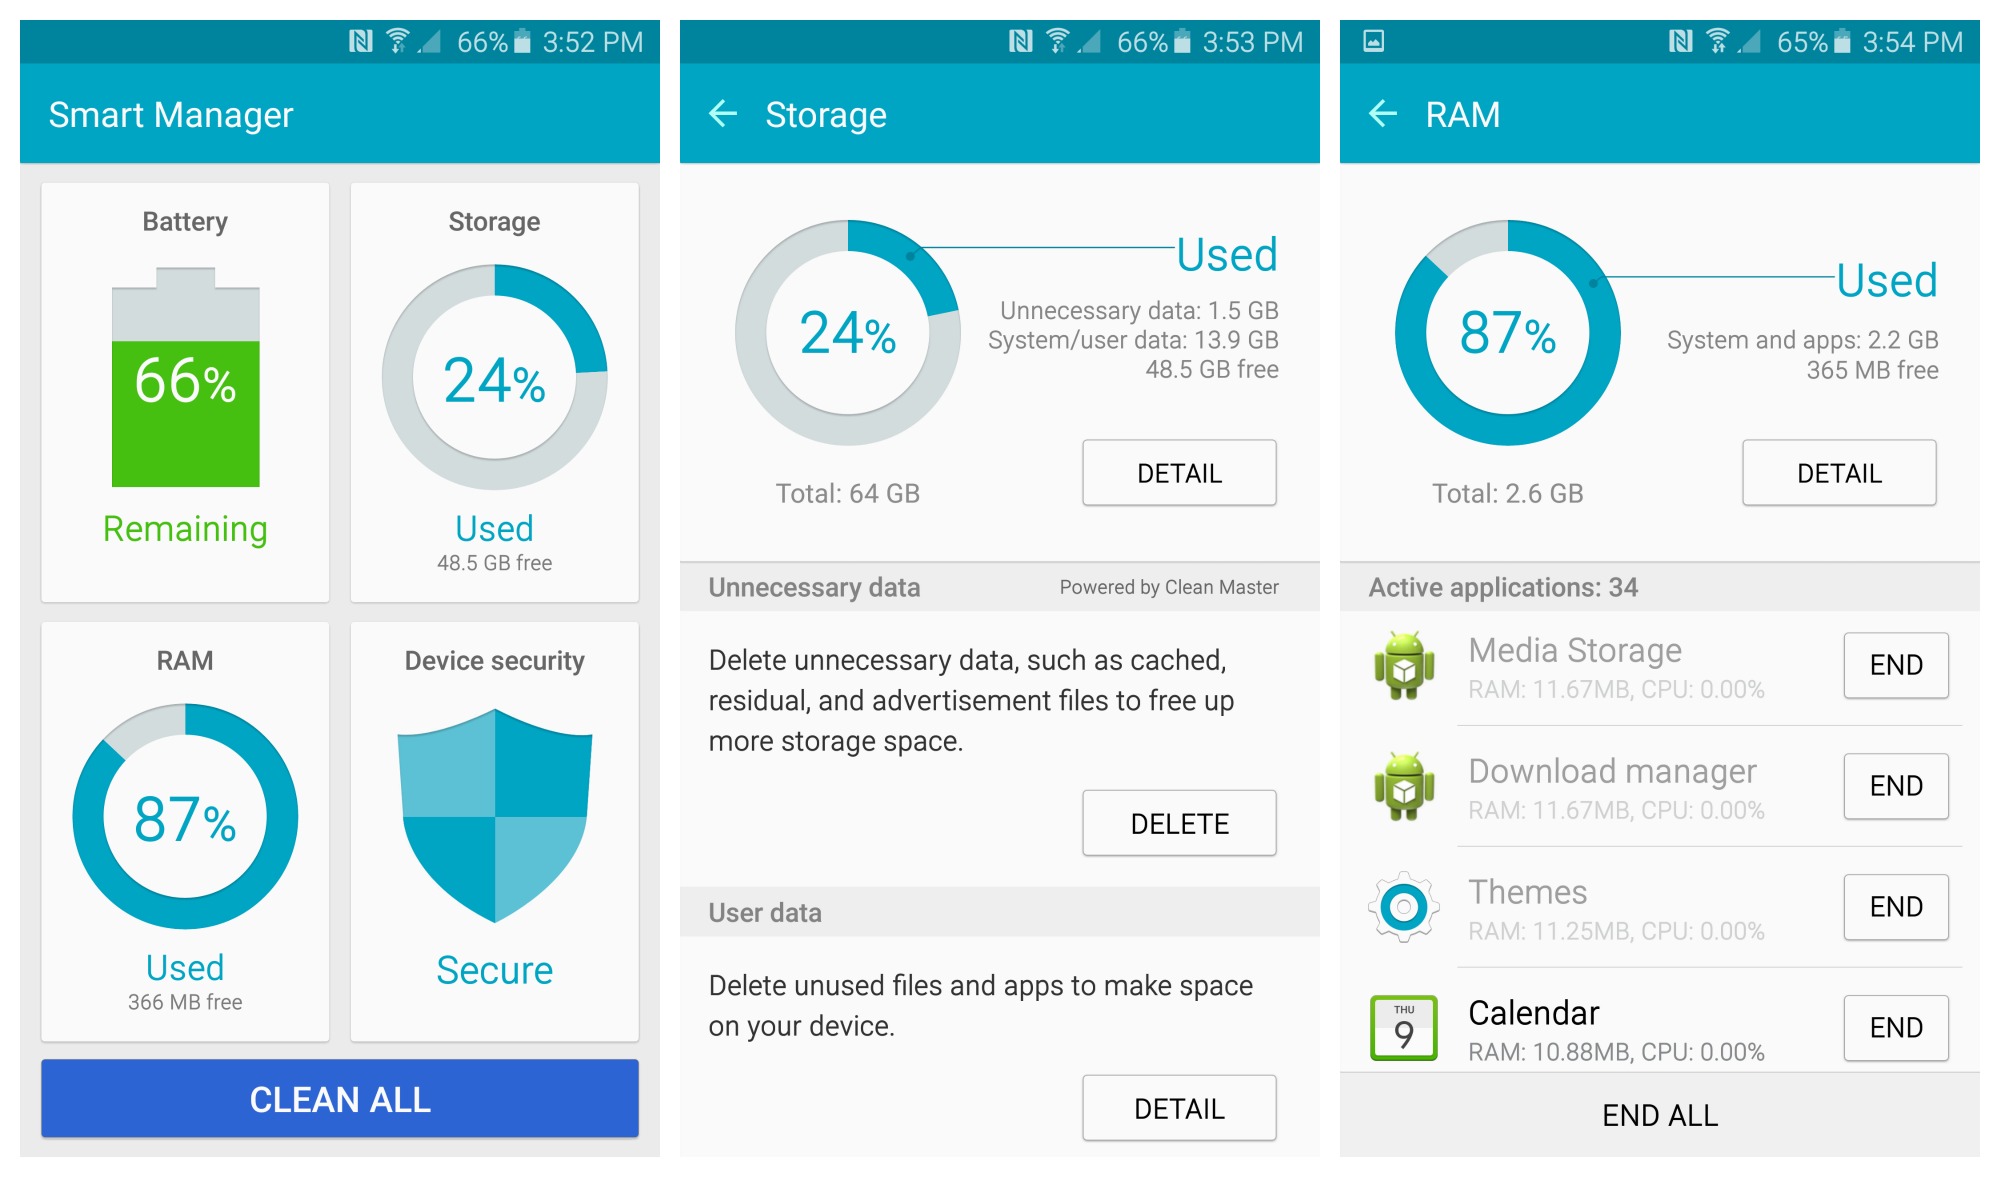 Samsung-Galaxy-S6-Smart-Manager-app